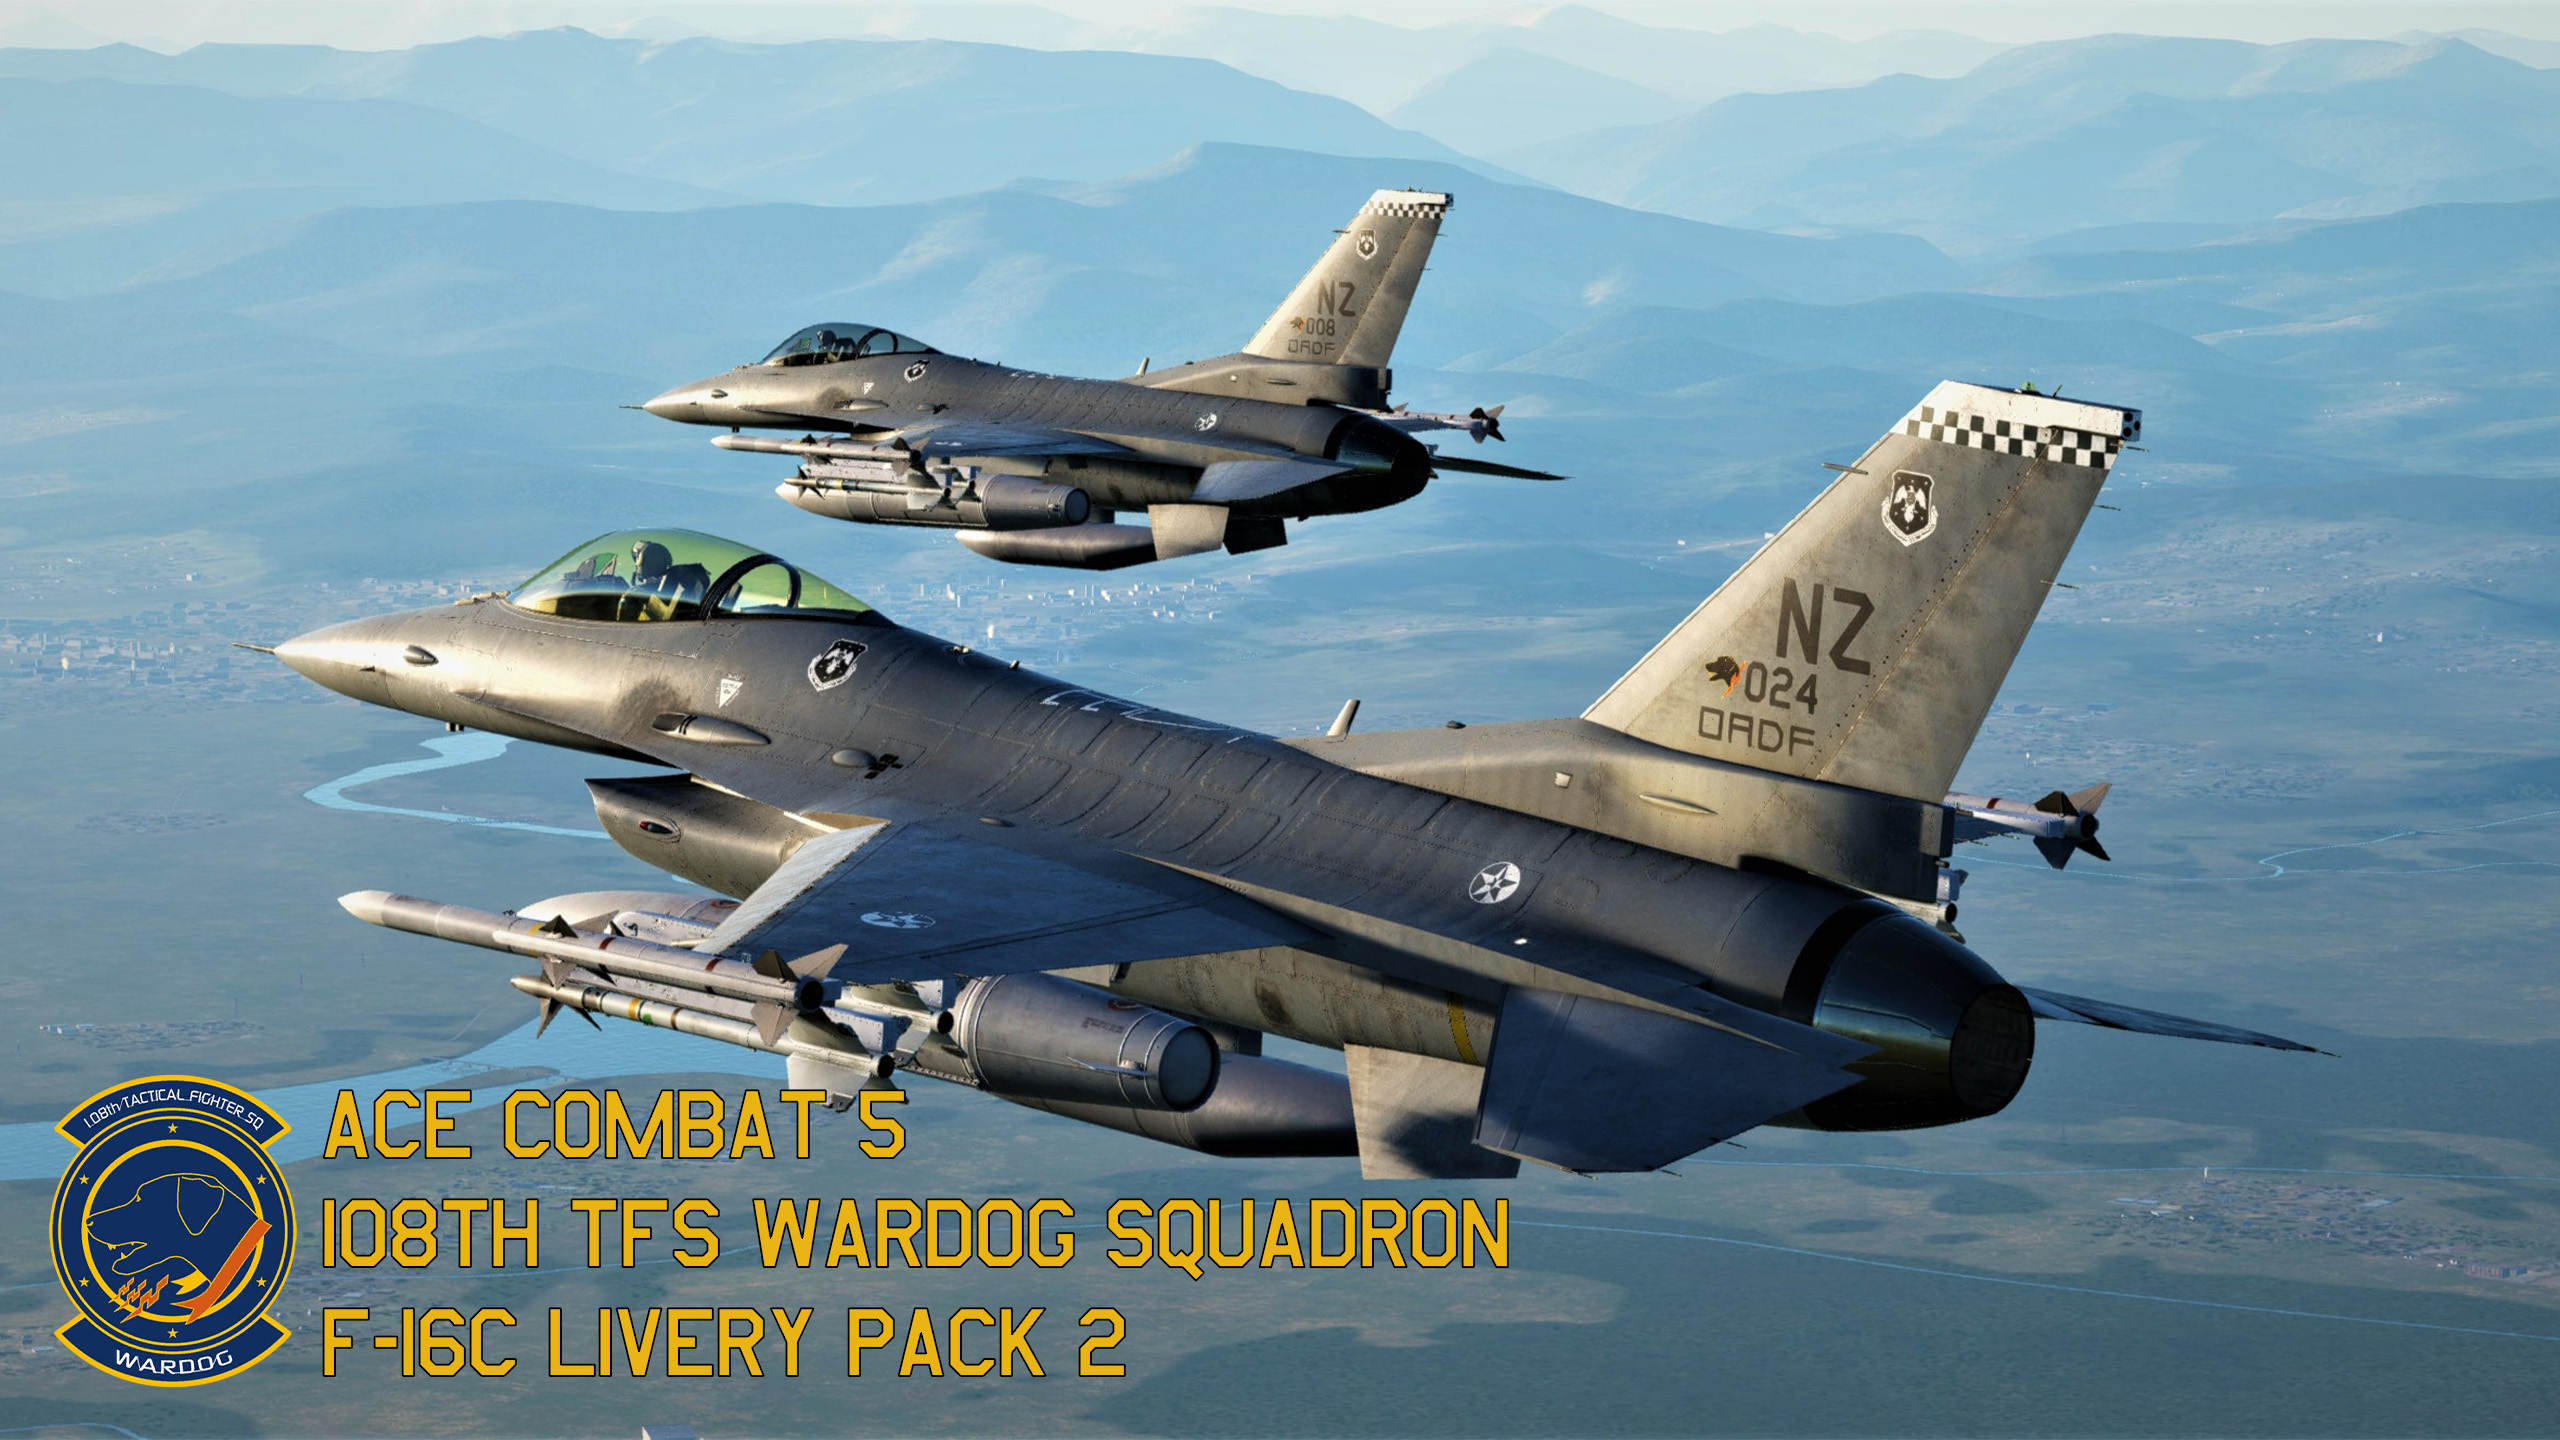 F-16C - Ace Combat 5: Wardog Livery Pack 2 V1.1